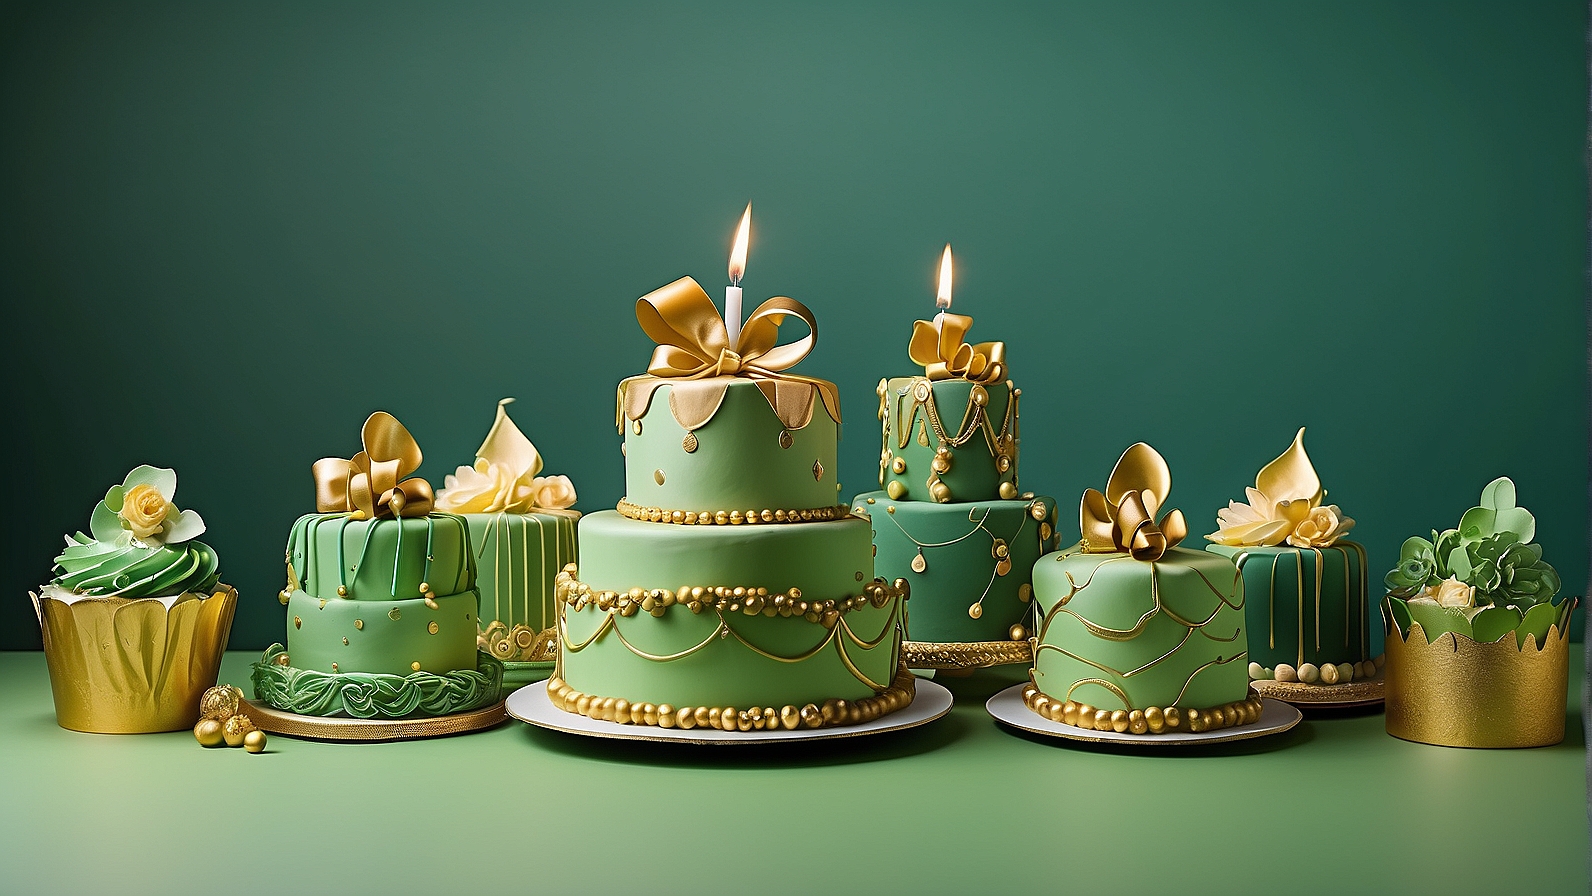 Happy Birthday Green cakes